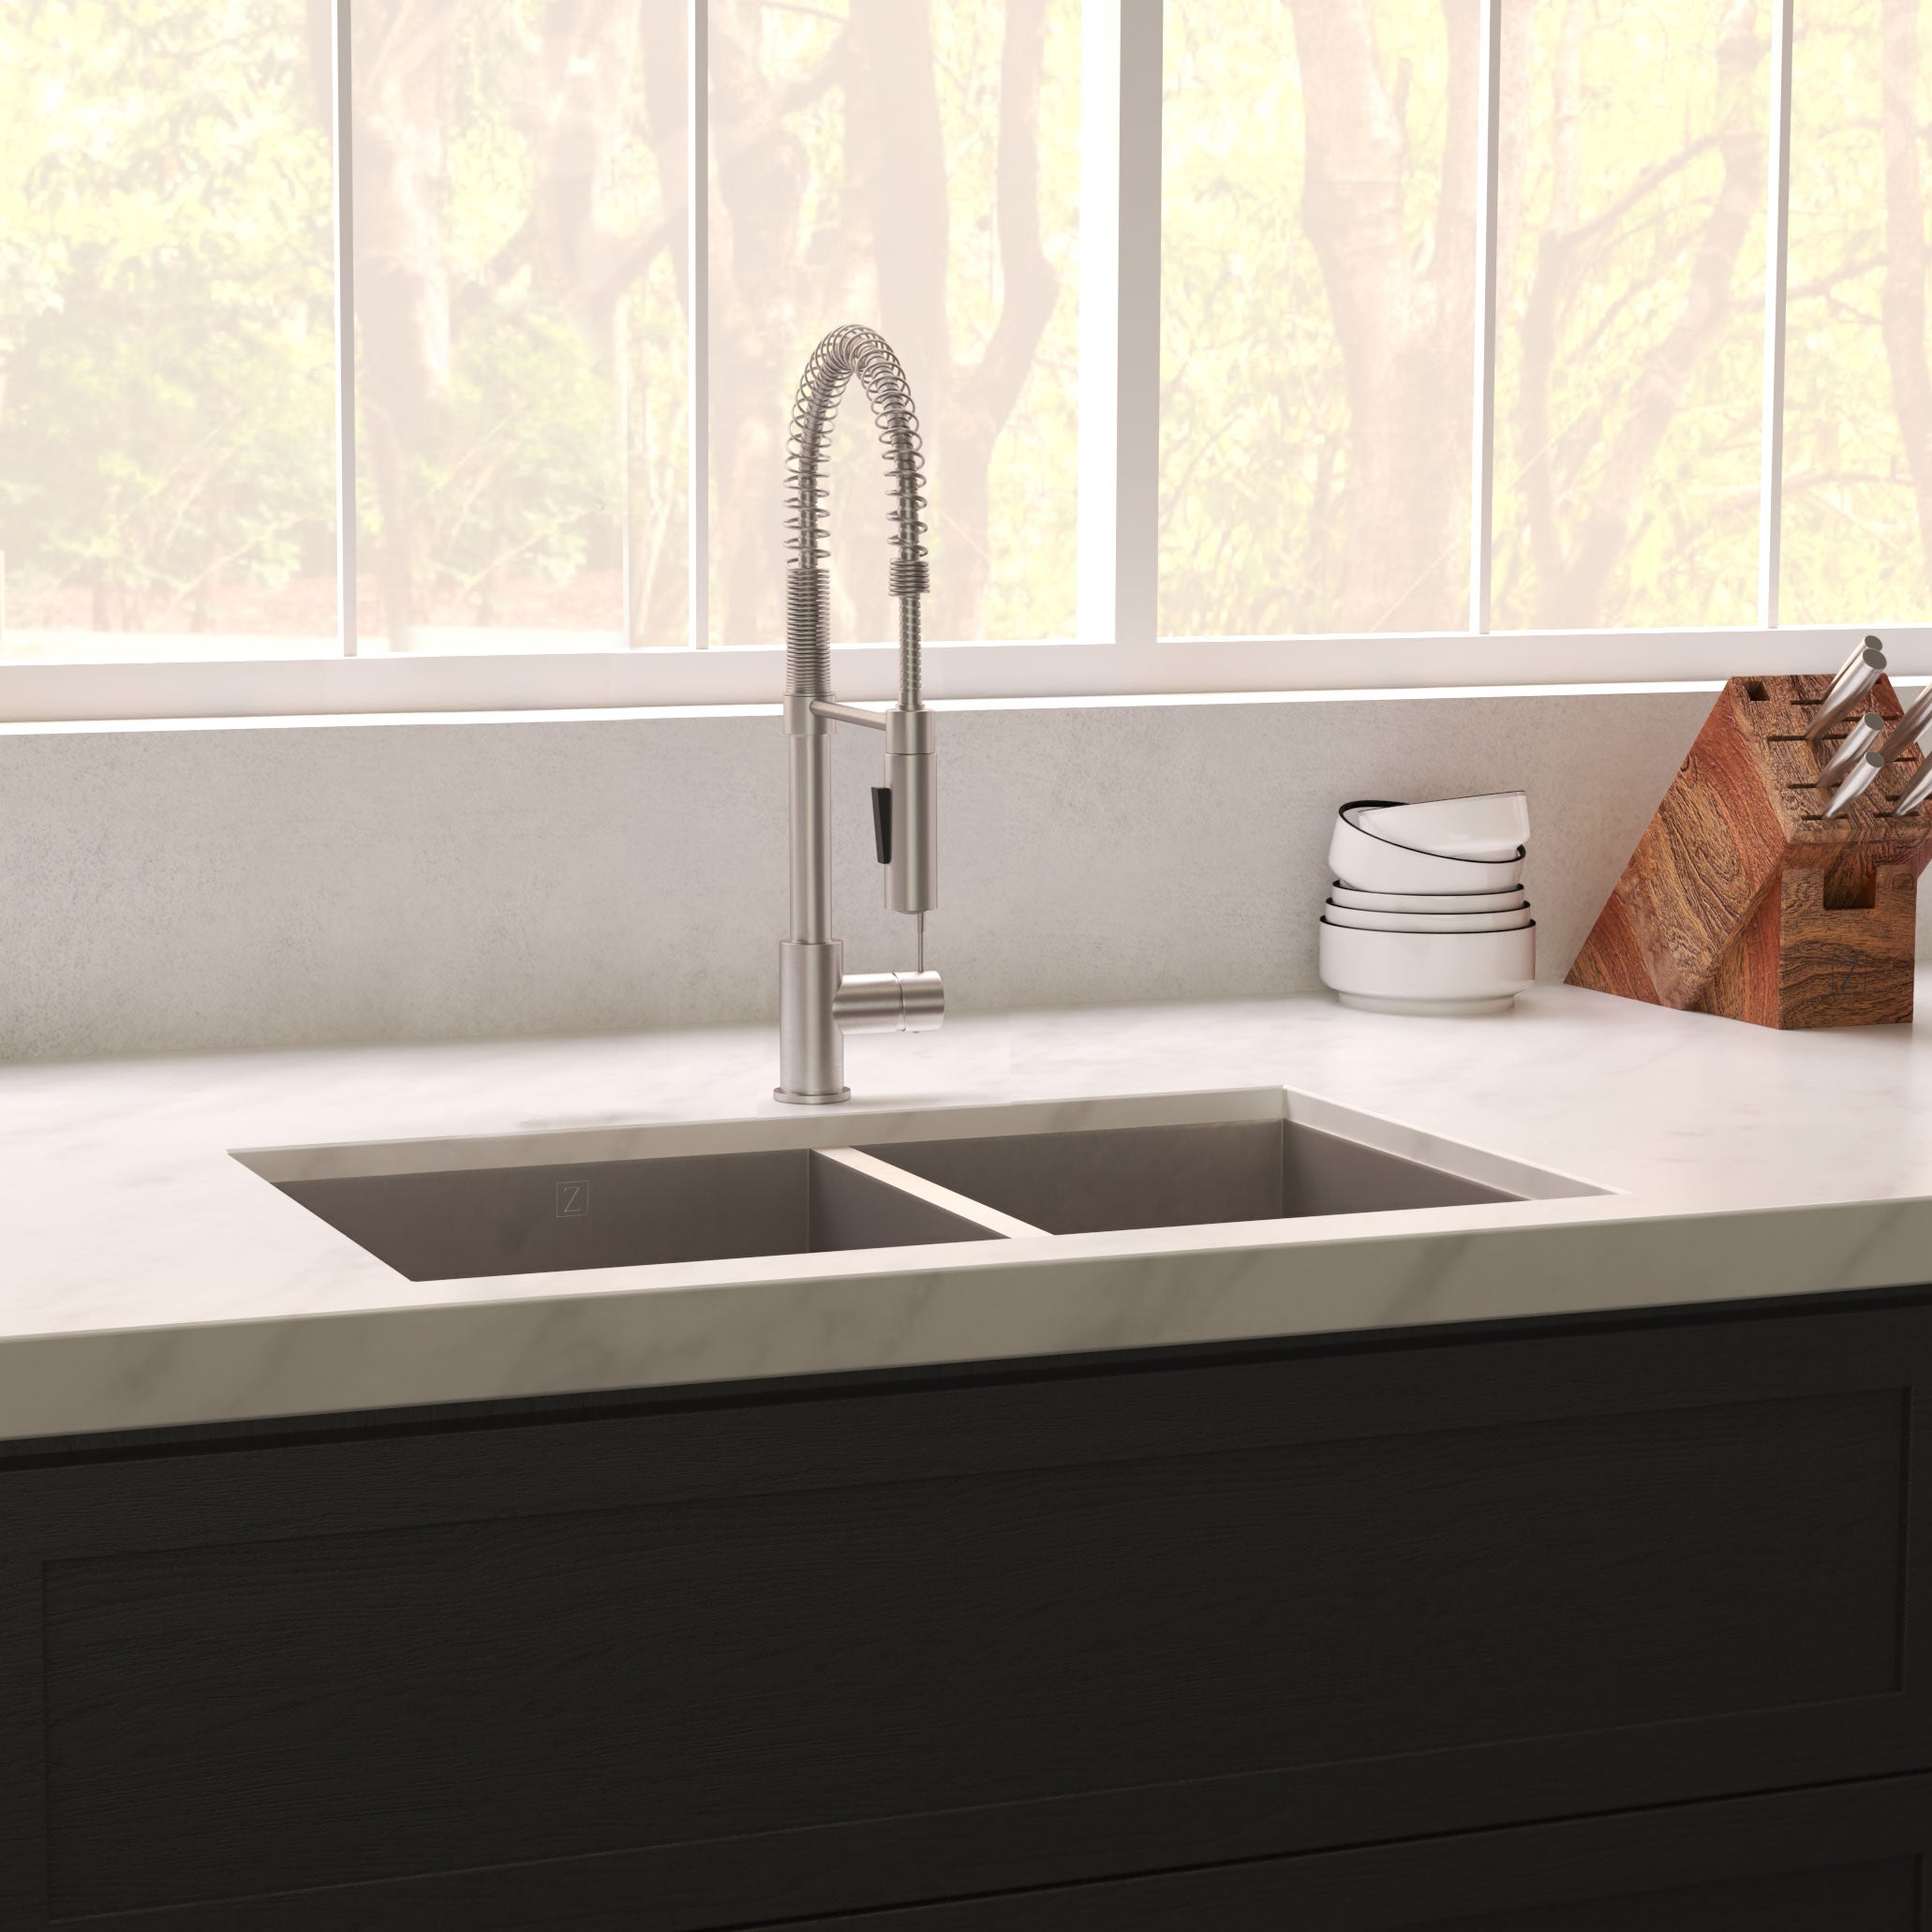 ZLINE Double Bowl Kitchen sink in modern luxury kitchen with white marble countertops.